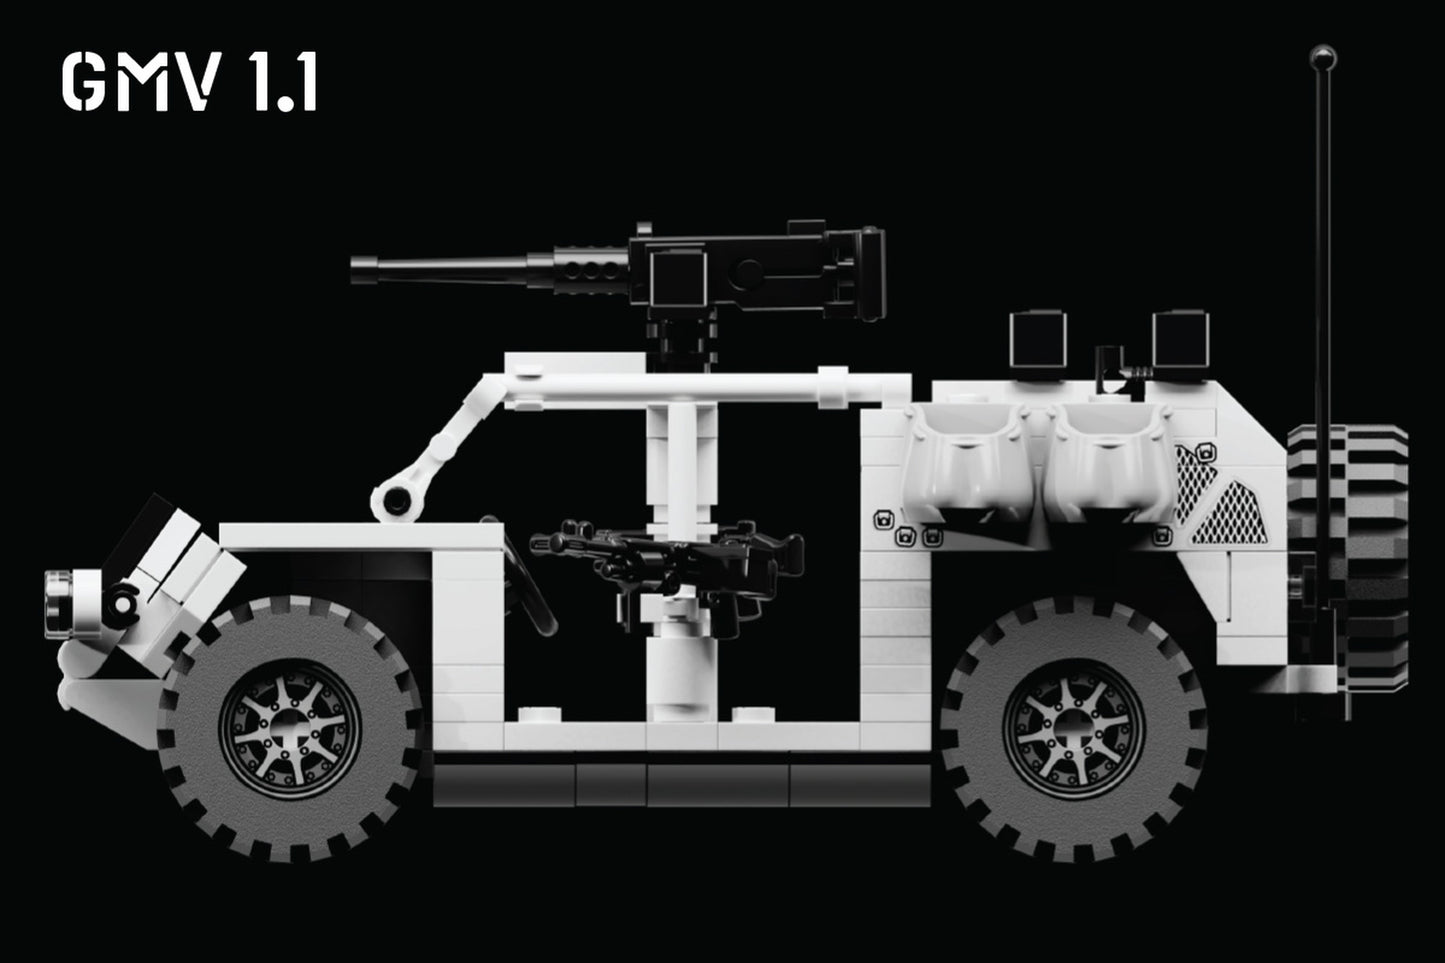 GMV 1.1 - Ground Mobility Vehicle